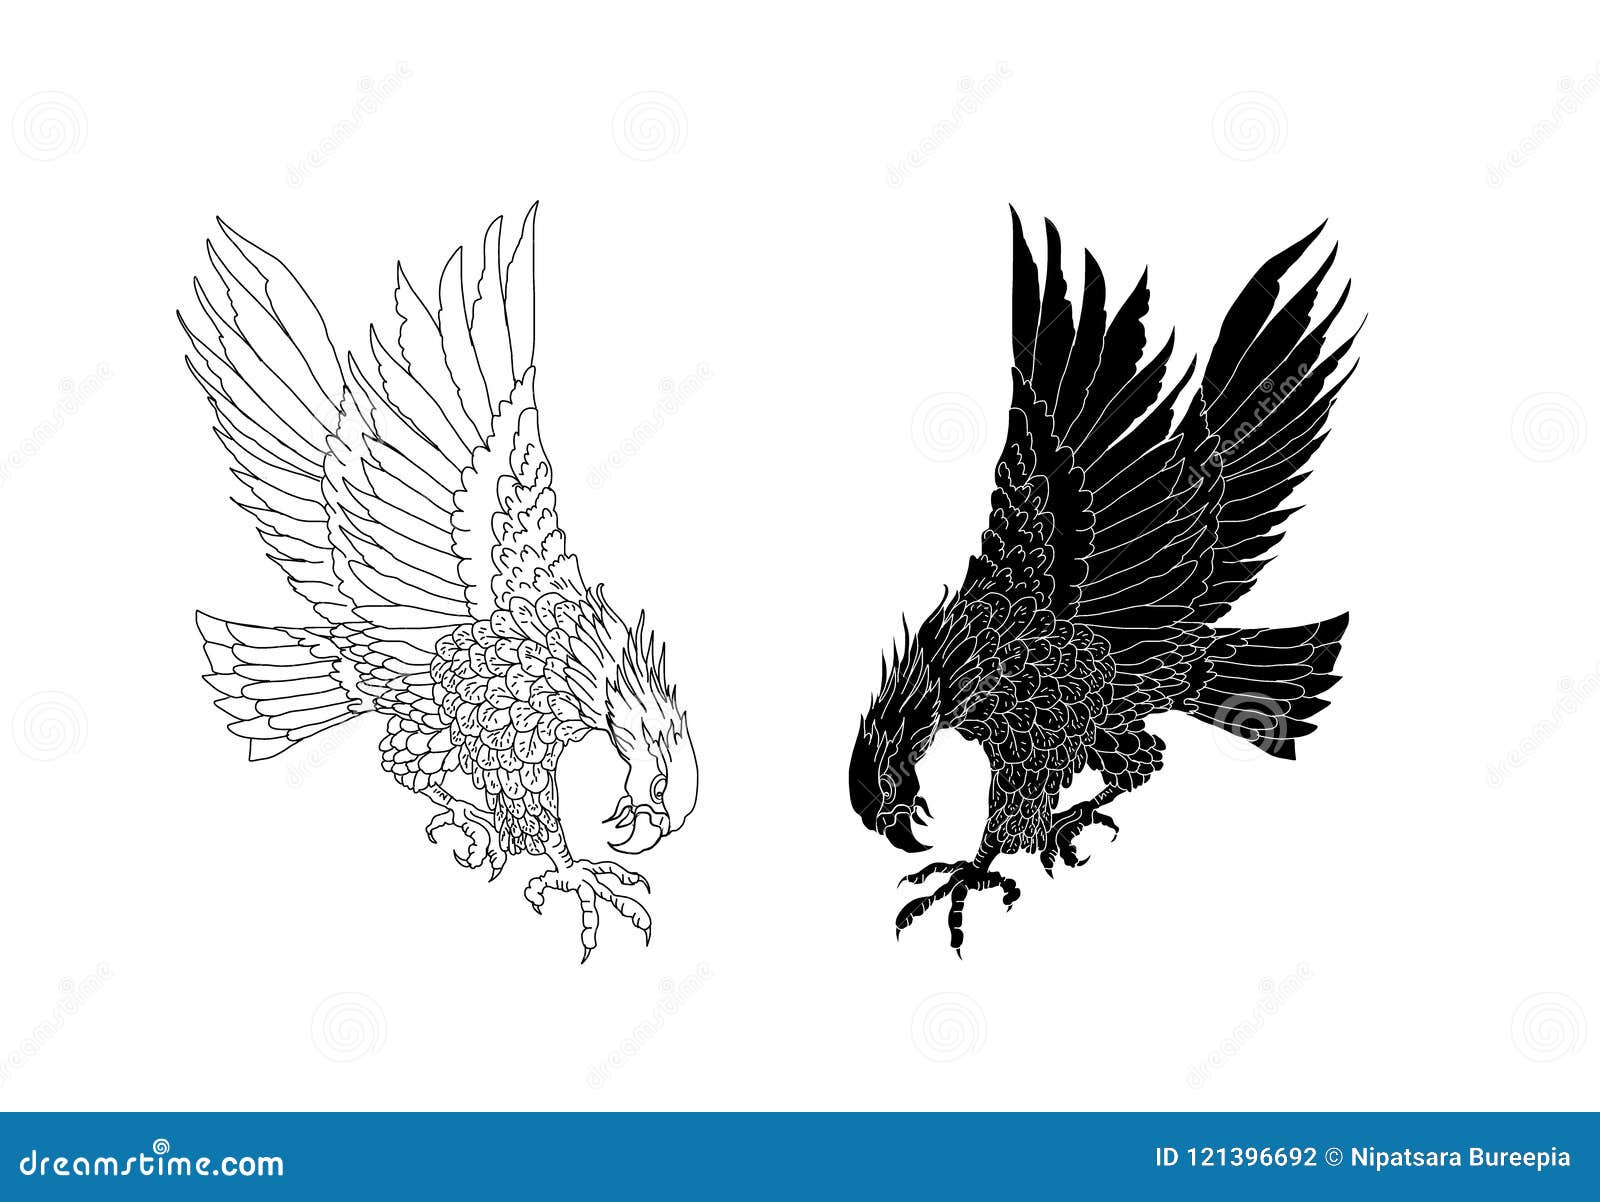 Hand Drawn Traditional Japanese  American Eagle   Tattoo Design Stock Vector - Illustration of native, hawk: 121396692